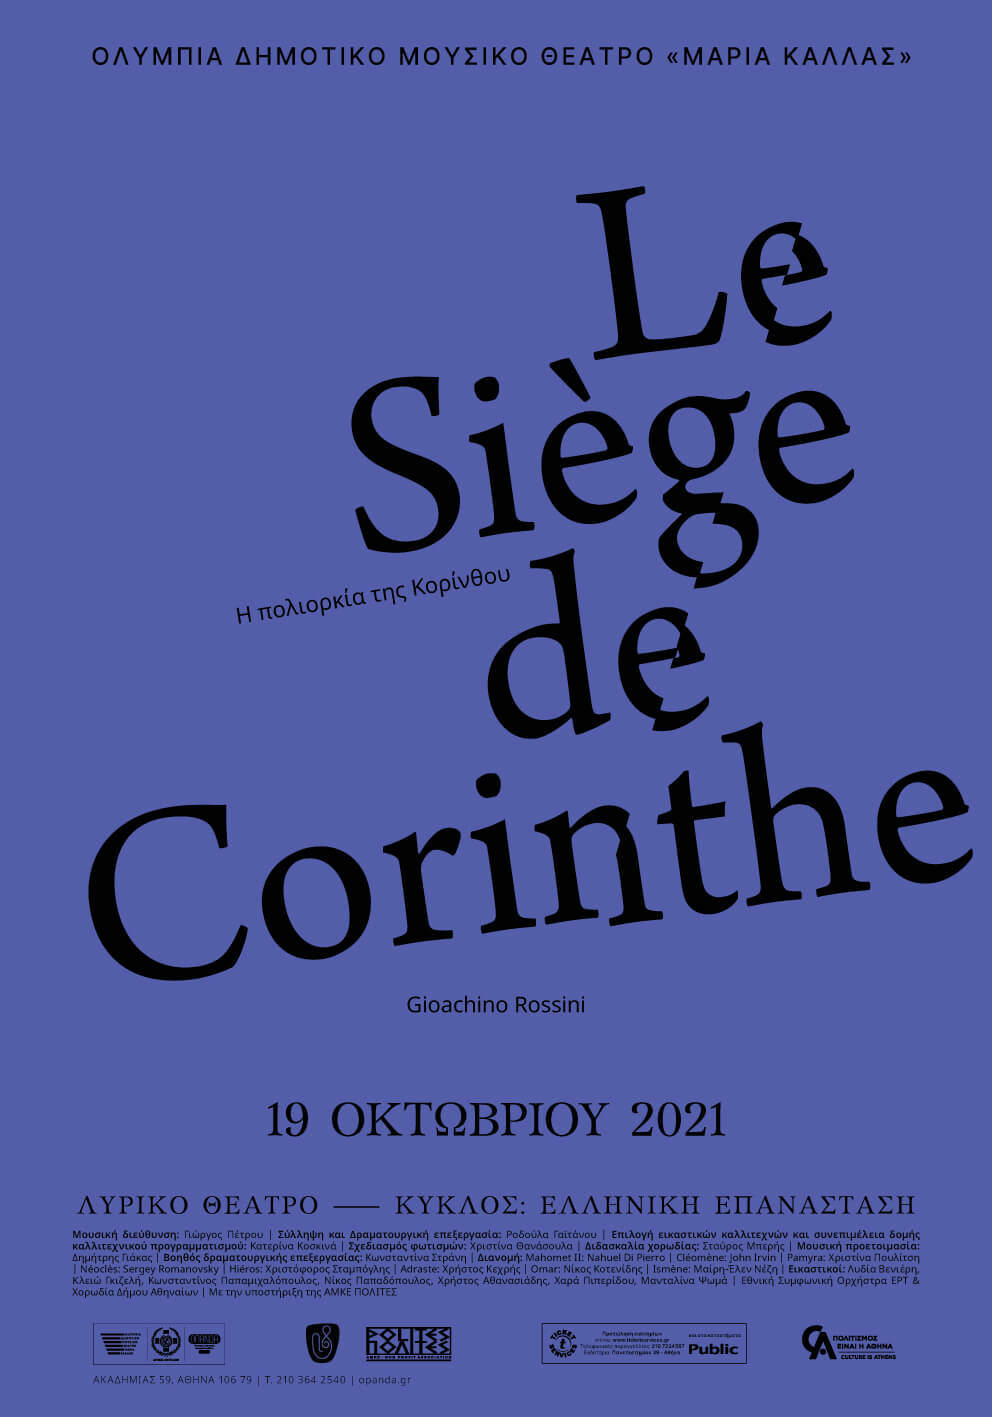 Le Siège de Corinthe (Η πολιορκία της Κορίνθου) του Gioachino Rossini στο δημοτικό θέατρο Ολύμπια